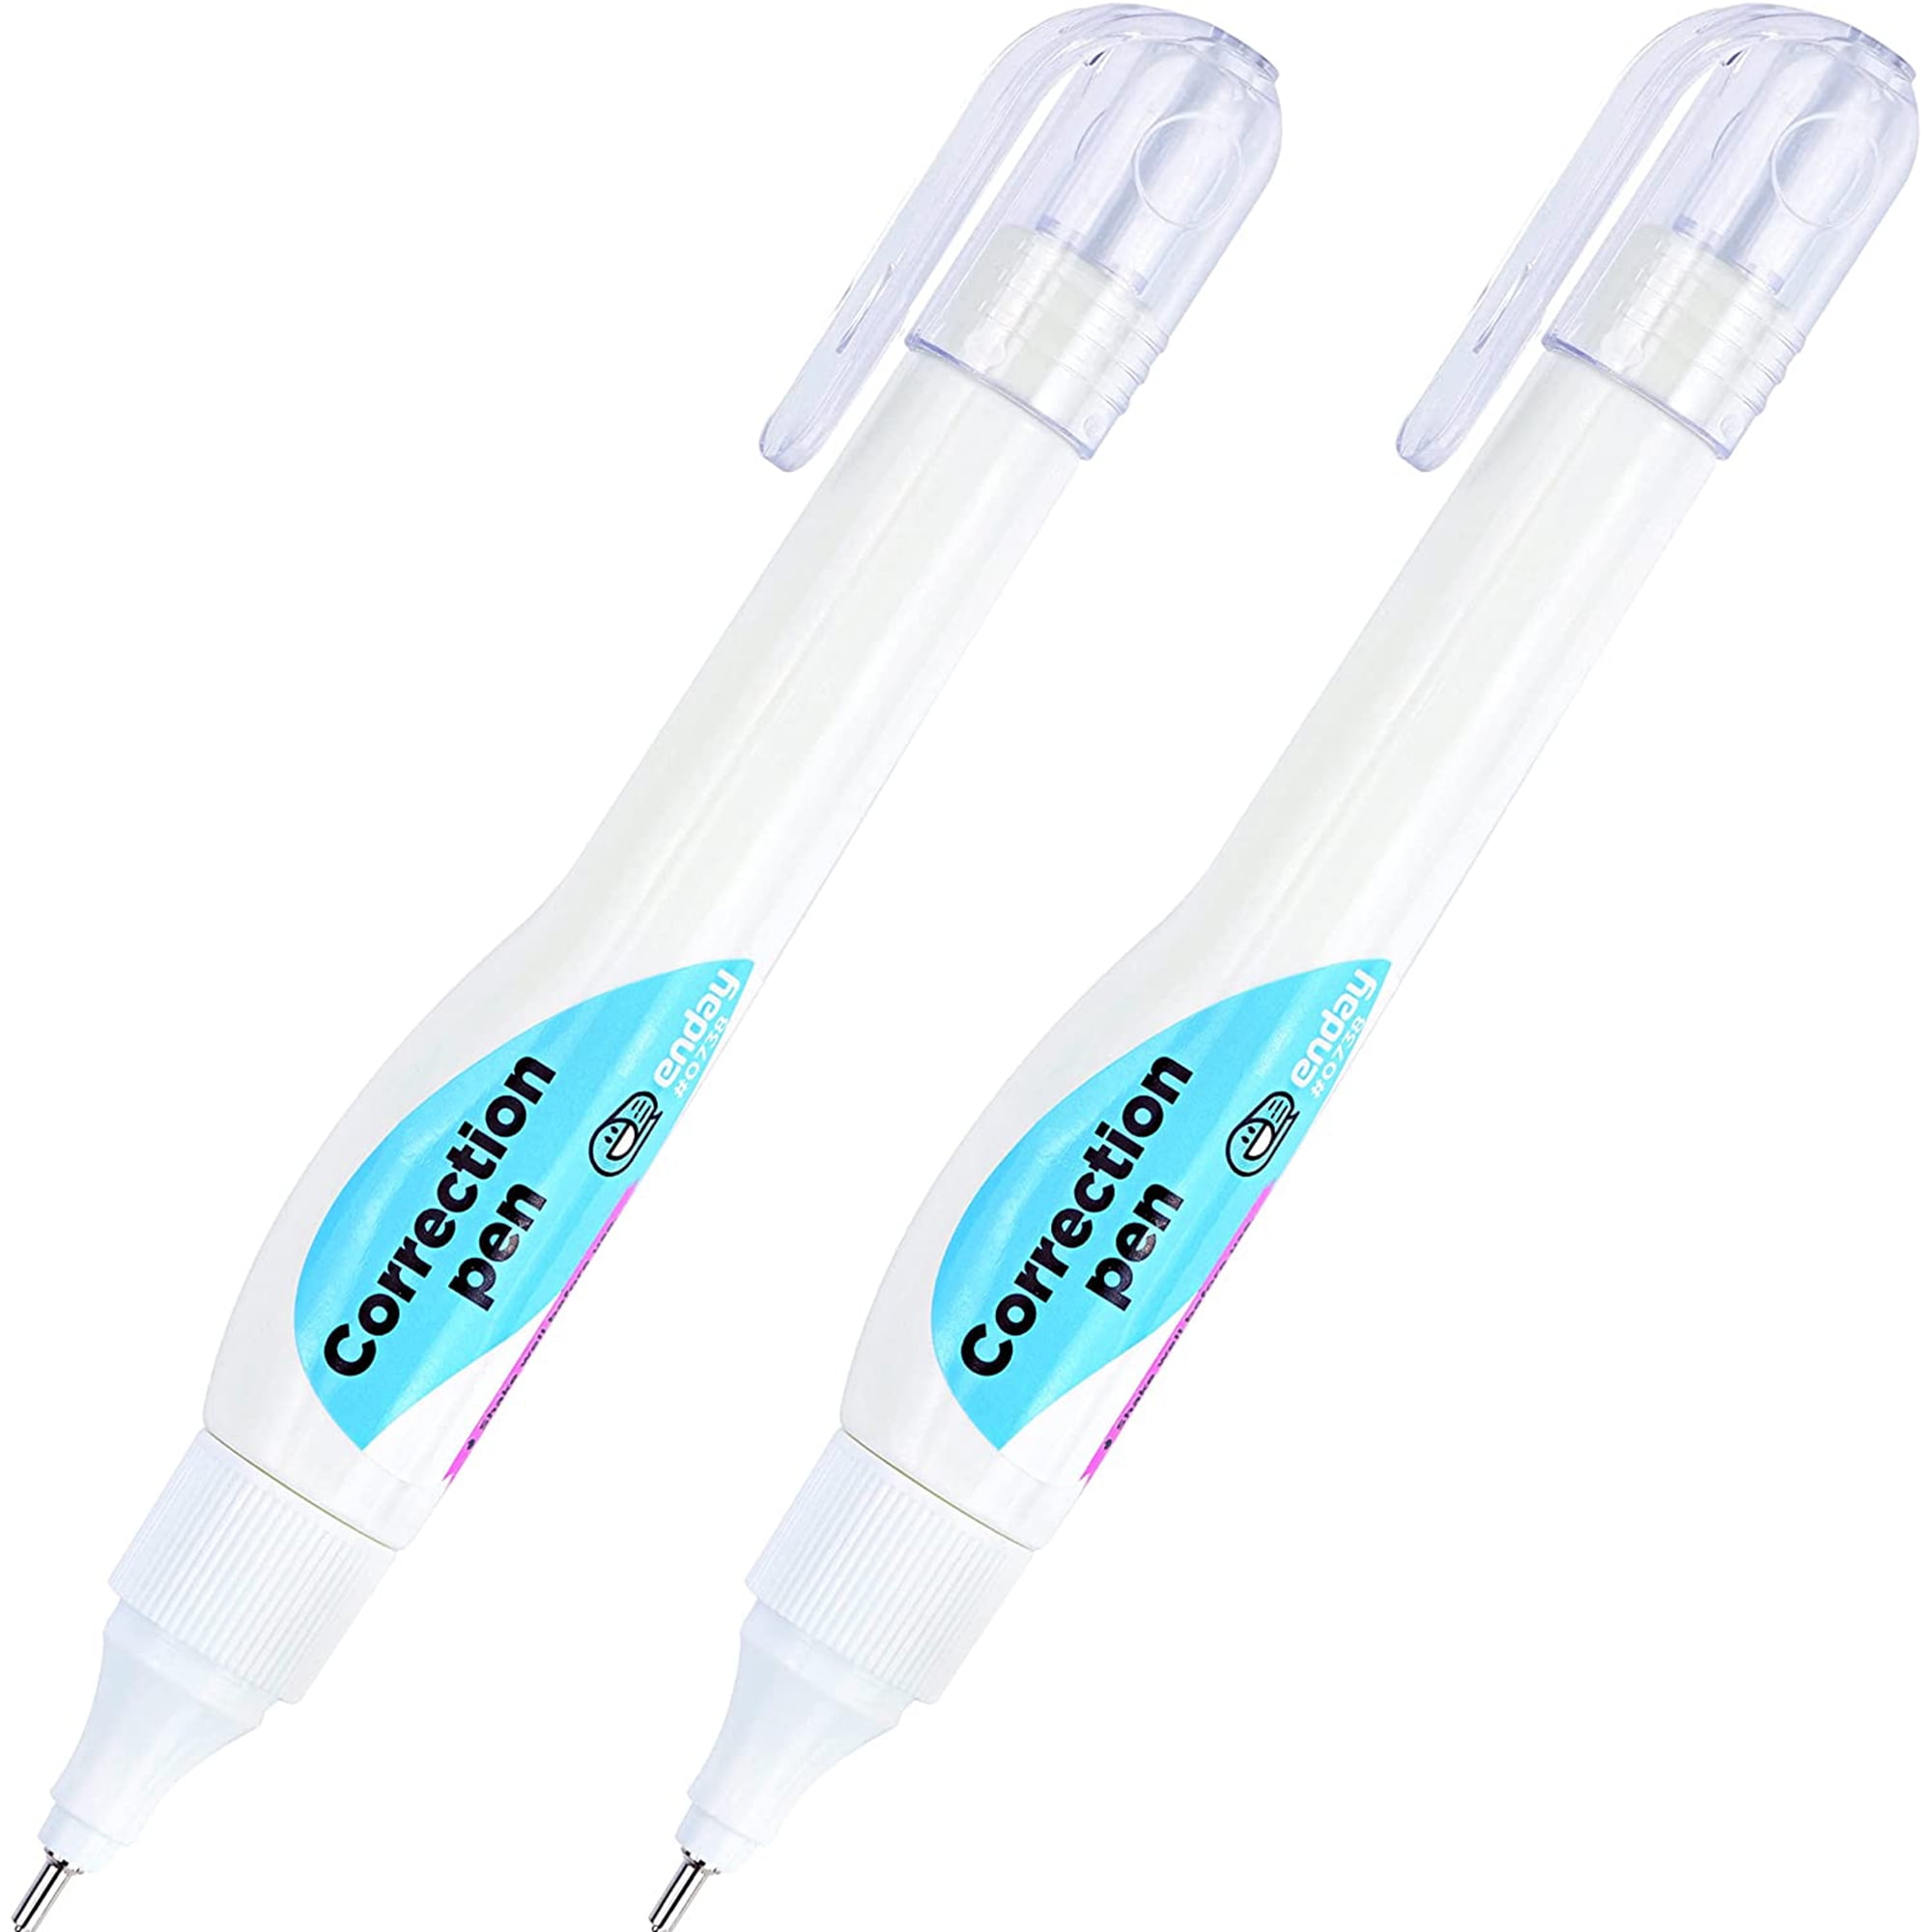 Enday Liquid Paper White Out Pen 7 ml Correction Fluid Ink Eraser, 12 Pack, Size: 0.2 fl oz